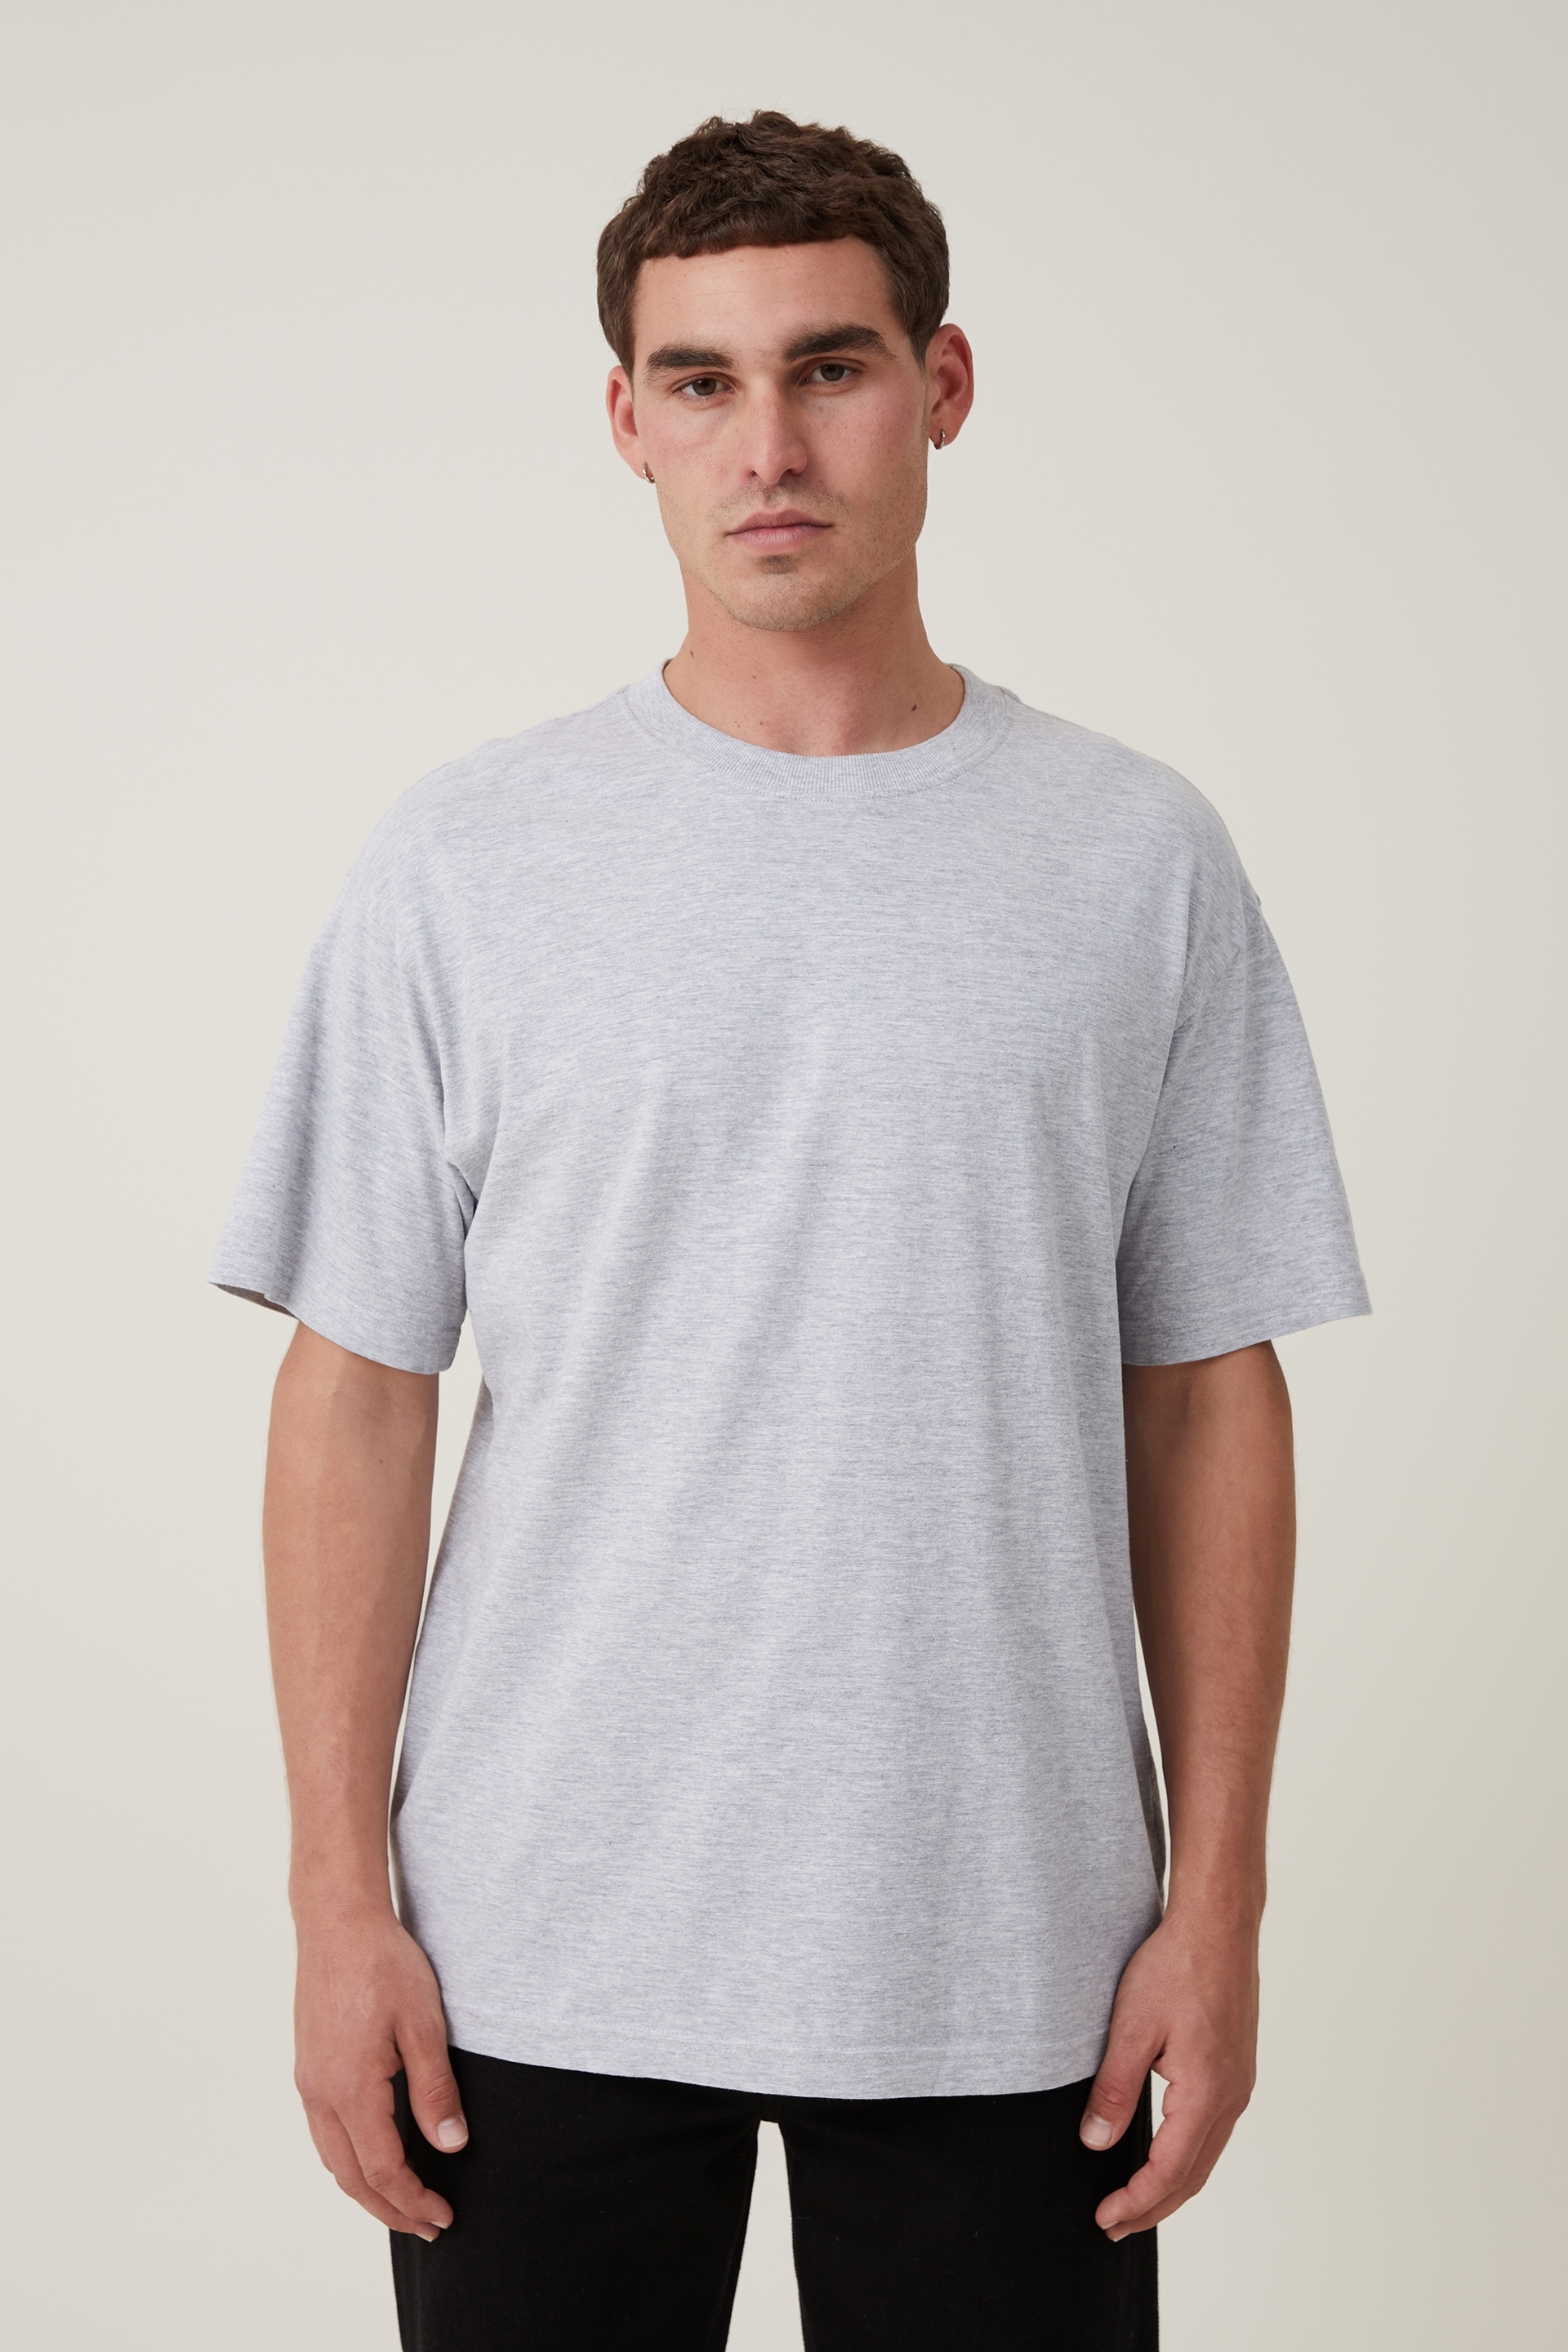 Cotton On Men - Organic Loose Fit T-Shirt - Light grey marle